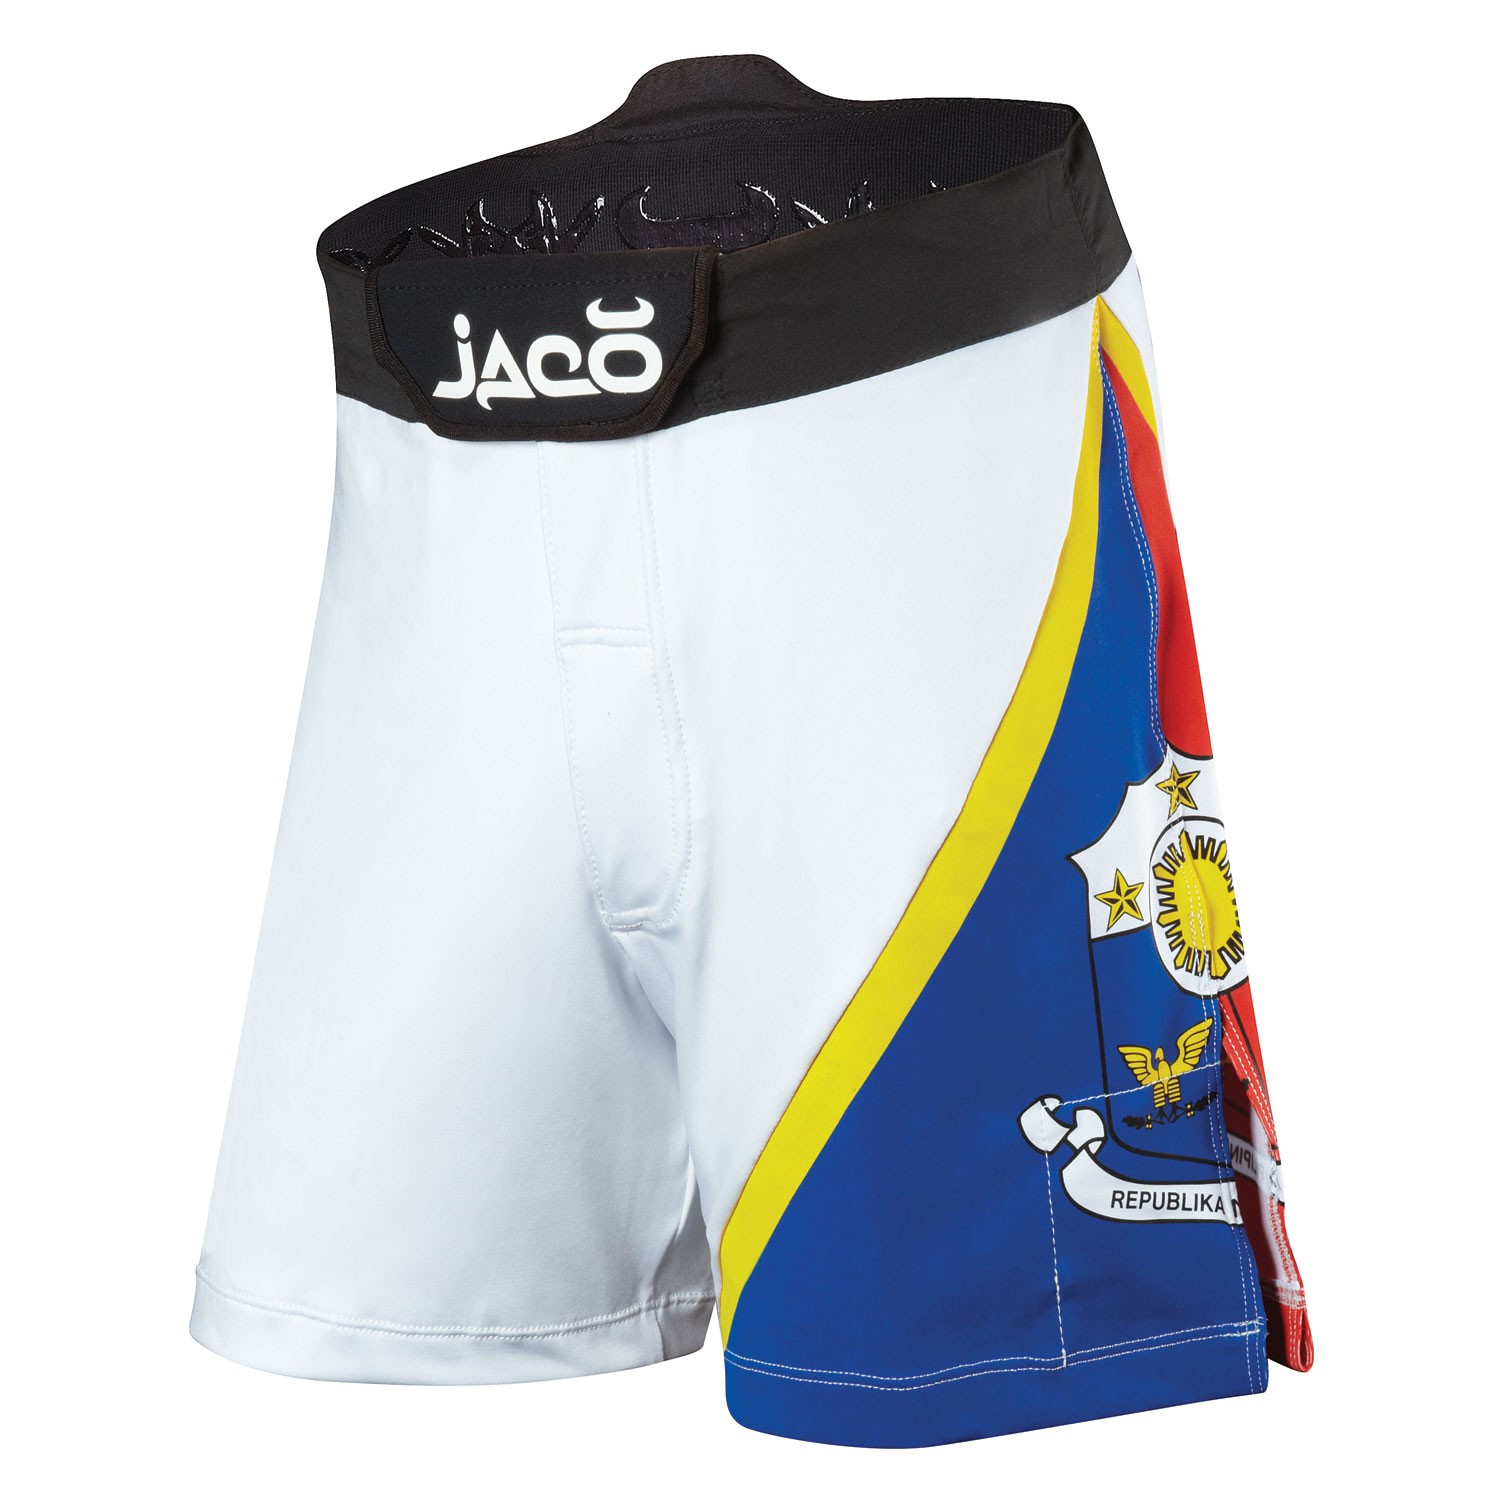 Jaco Shorts Size Chart